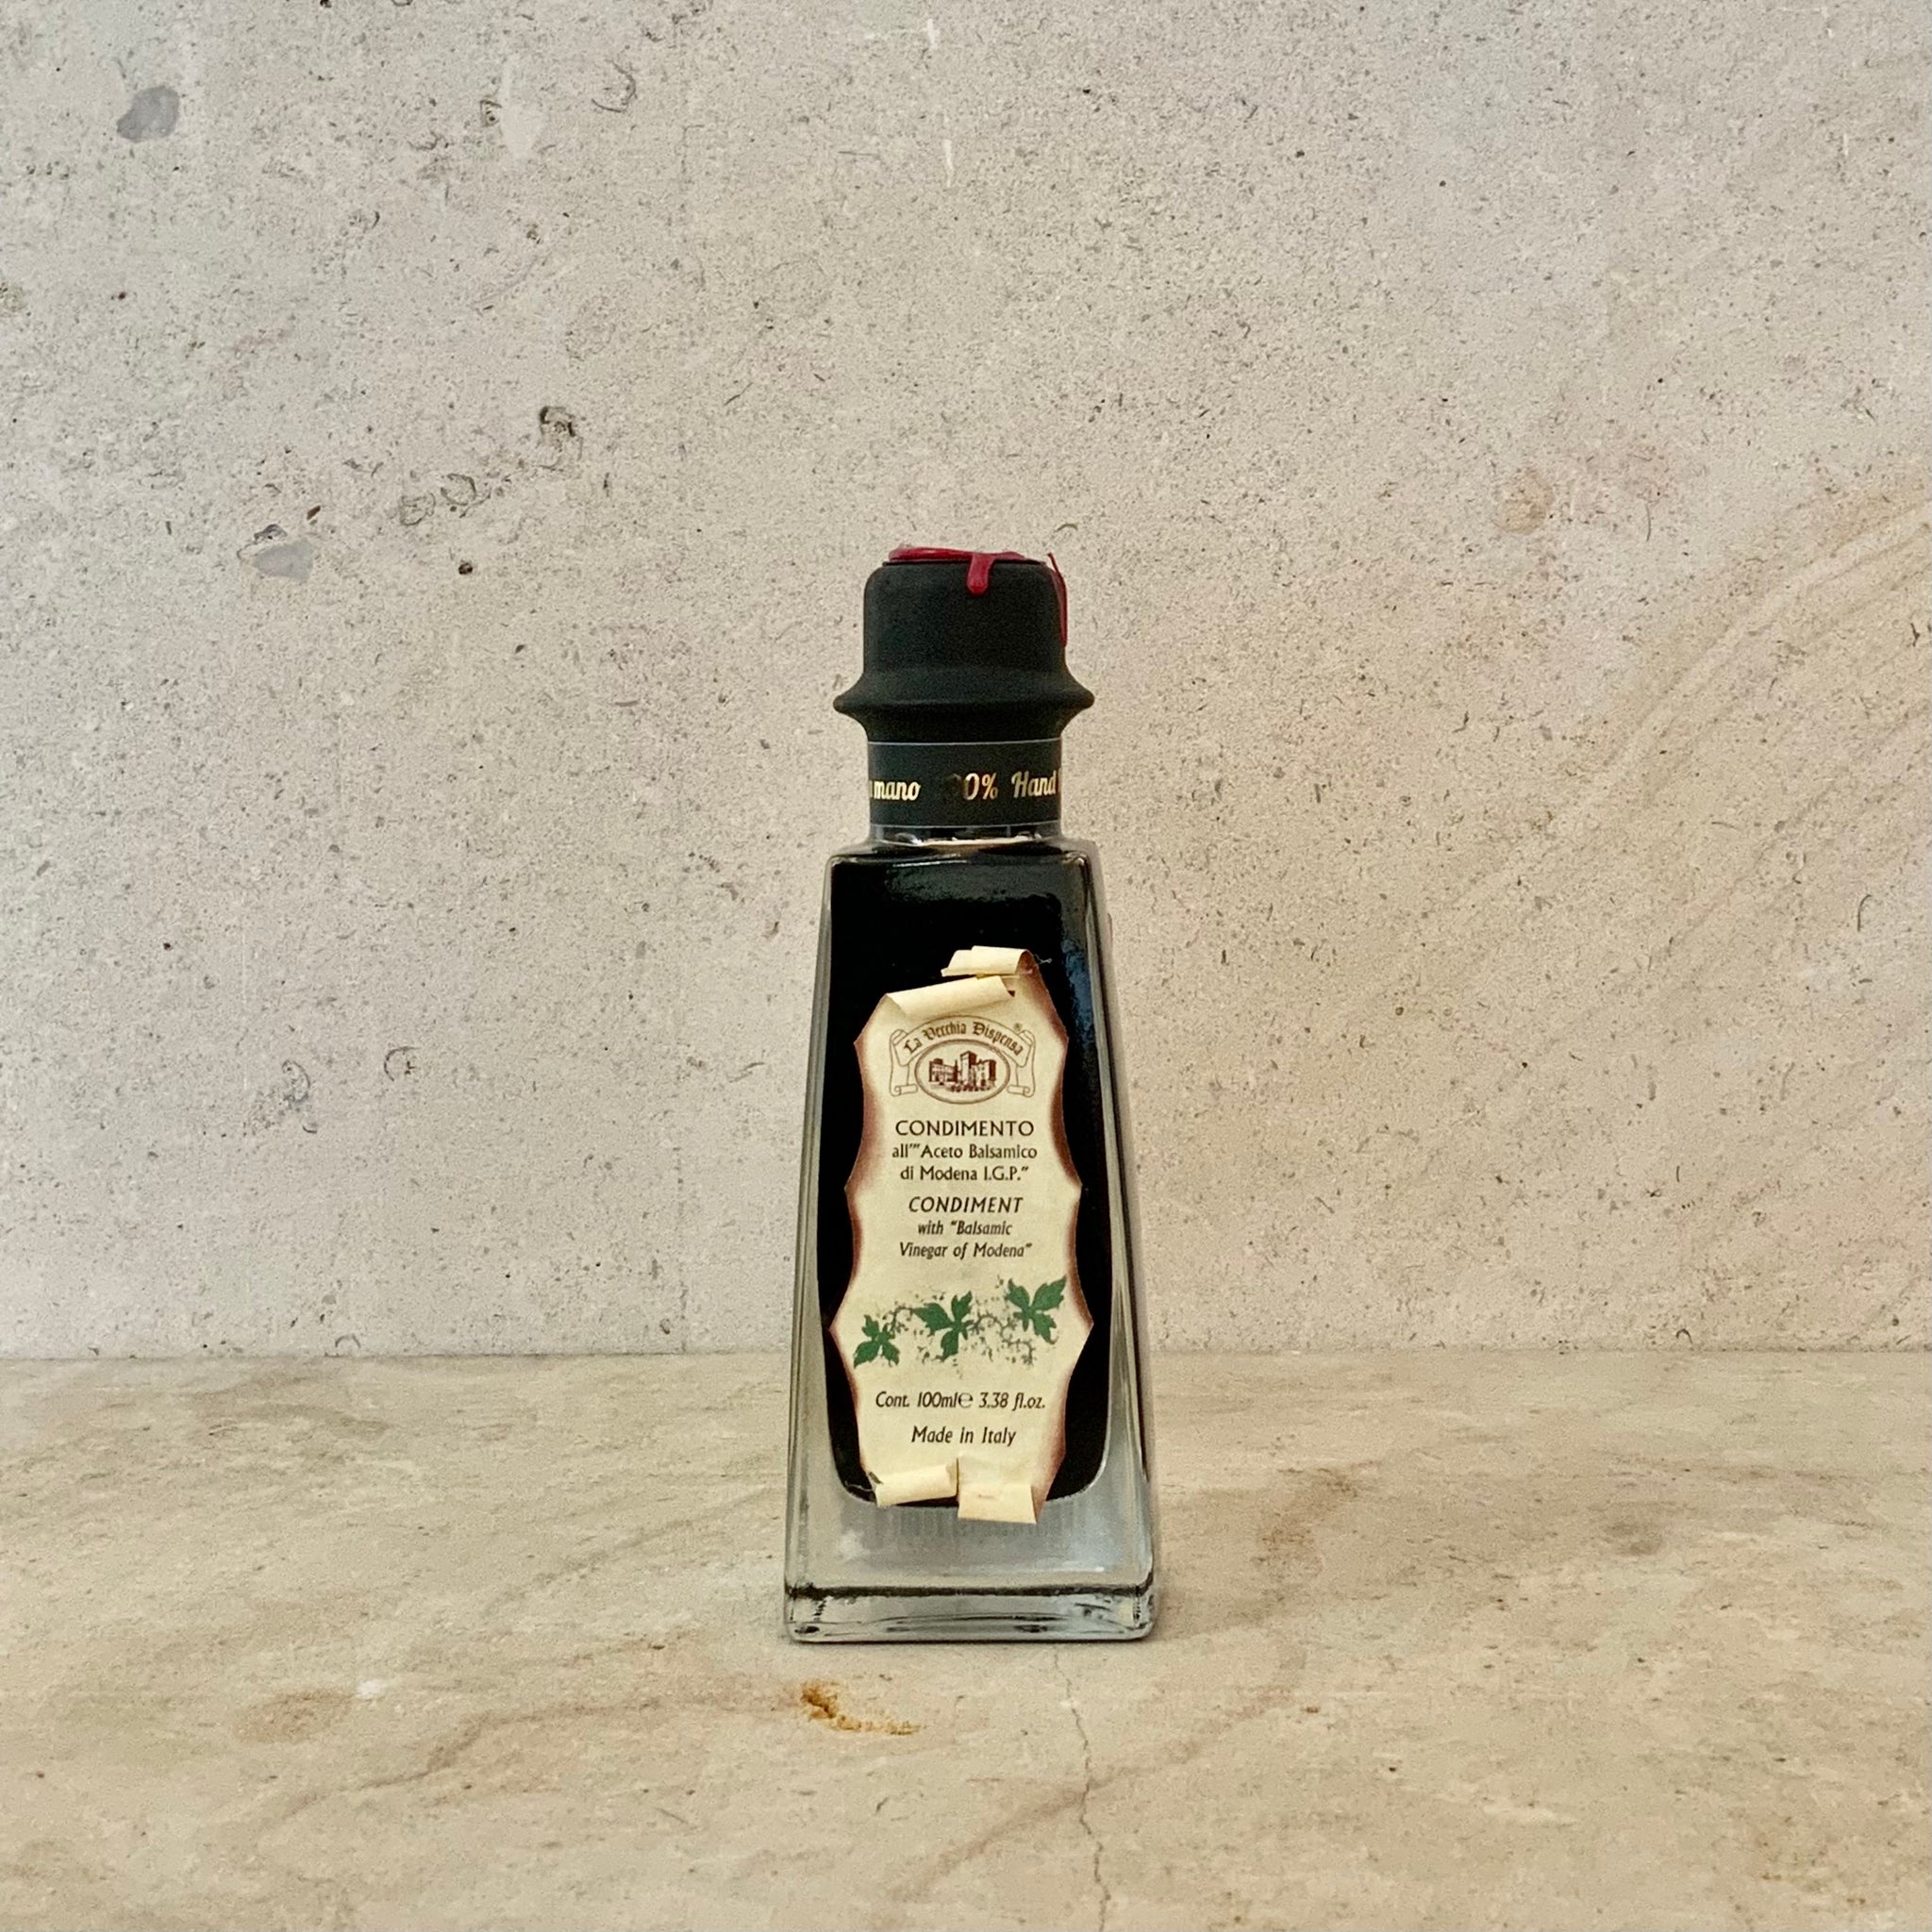 Vecchia Dispensa Green Label Balsamic Vinegar